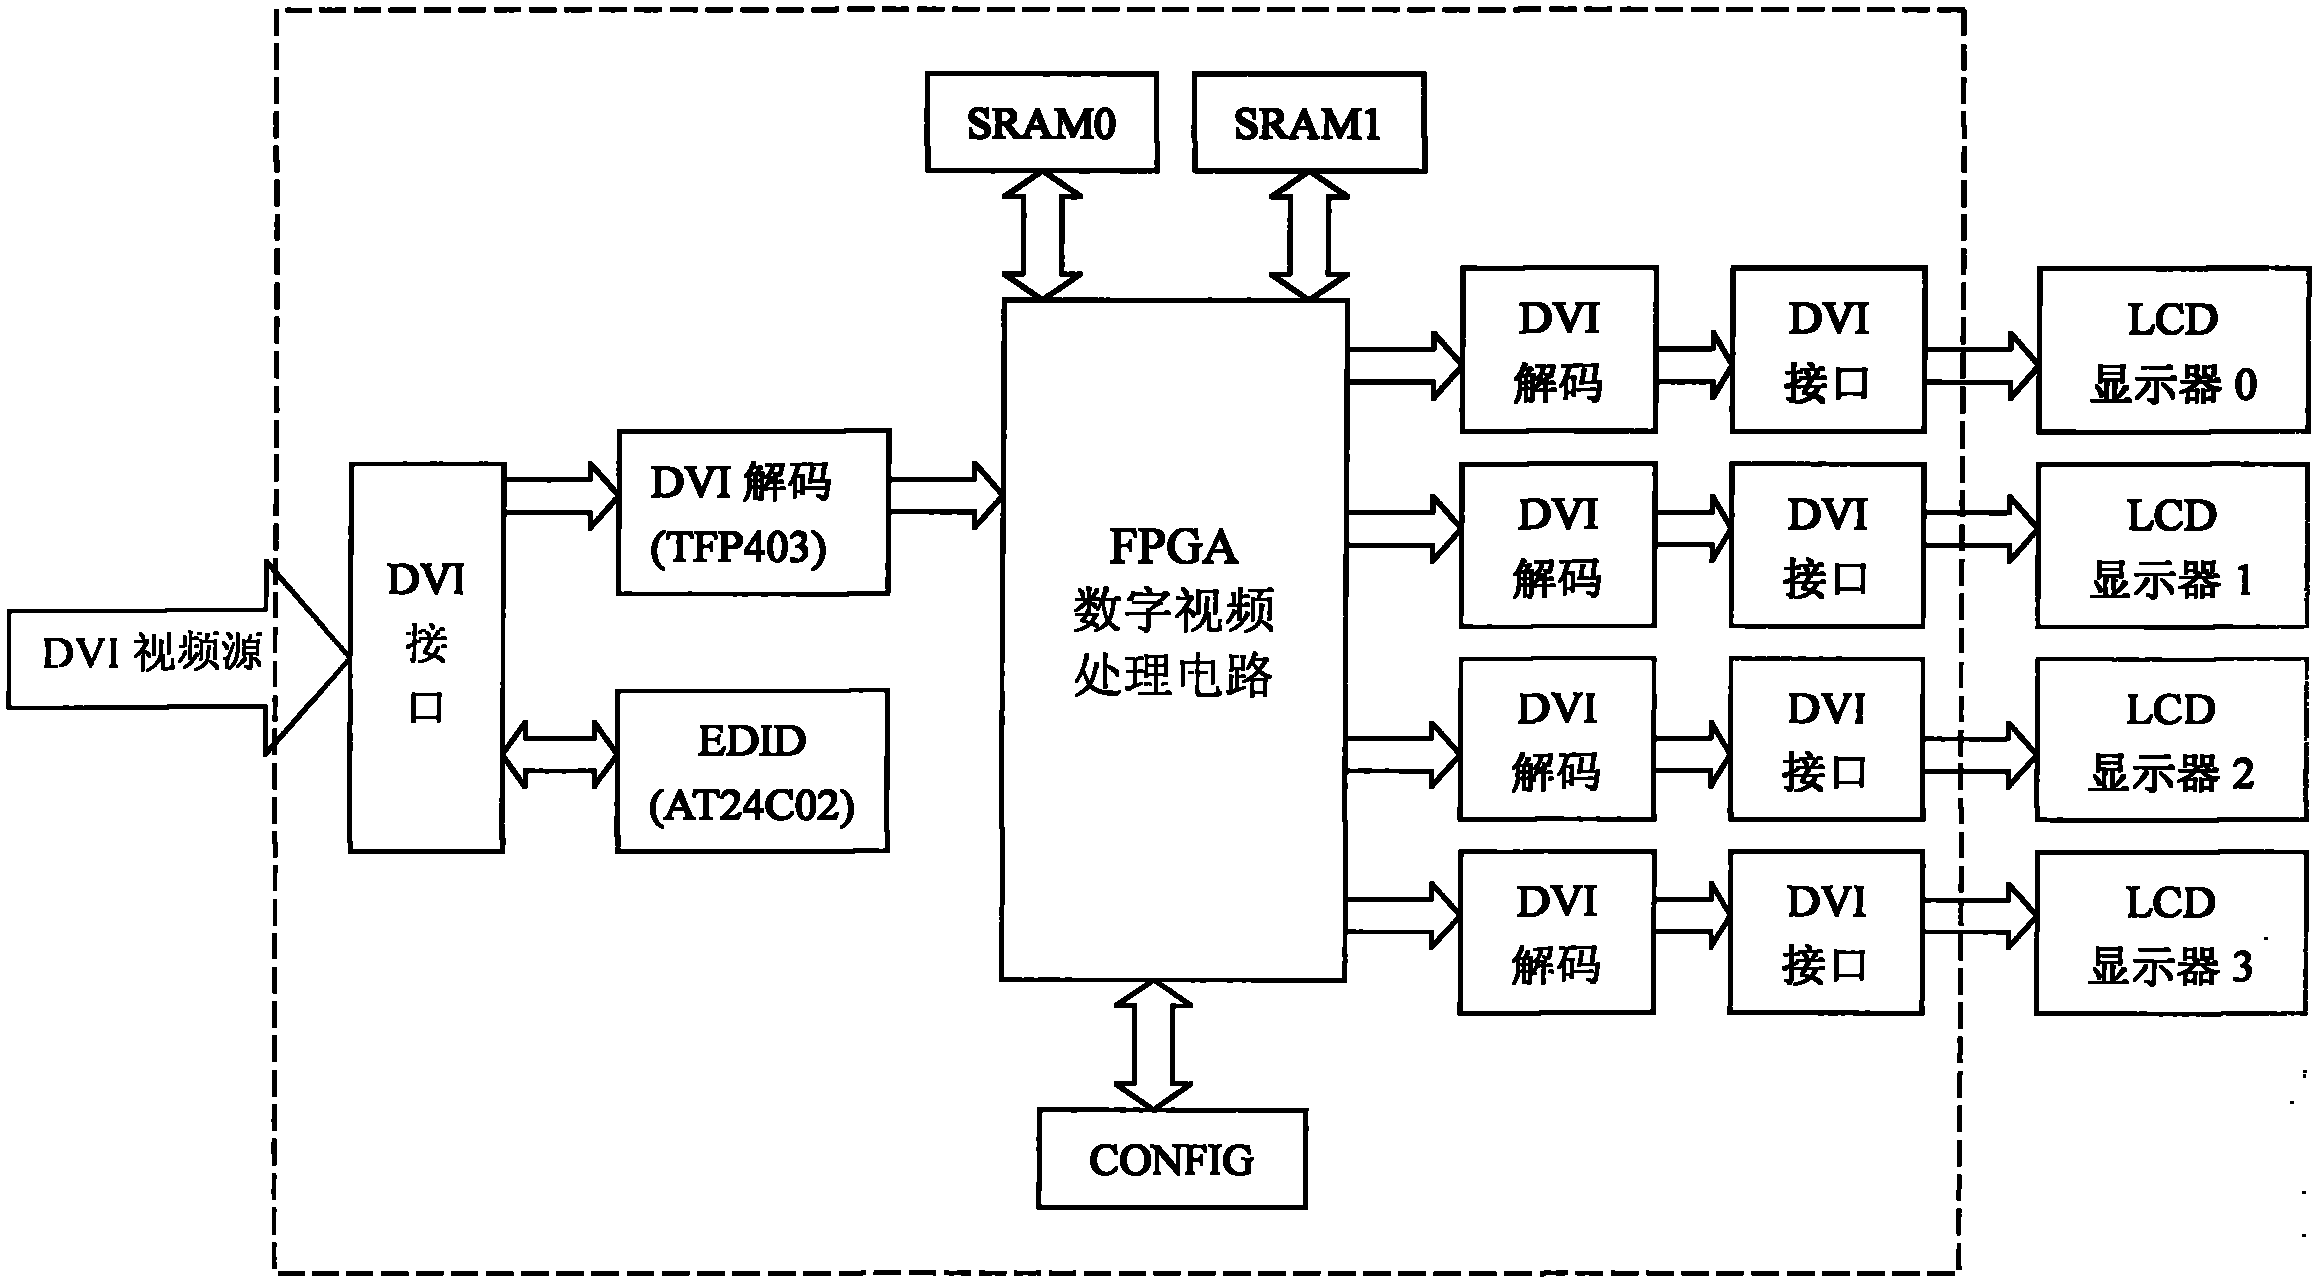 Image mosaic processor on basis of FPGA (Field Programmable Gata Array) and image mosaic method